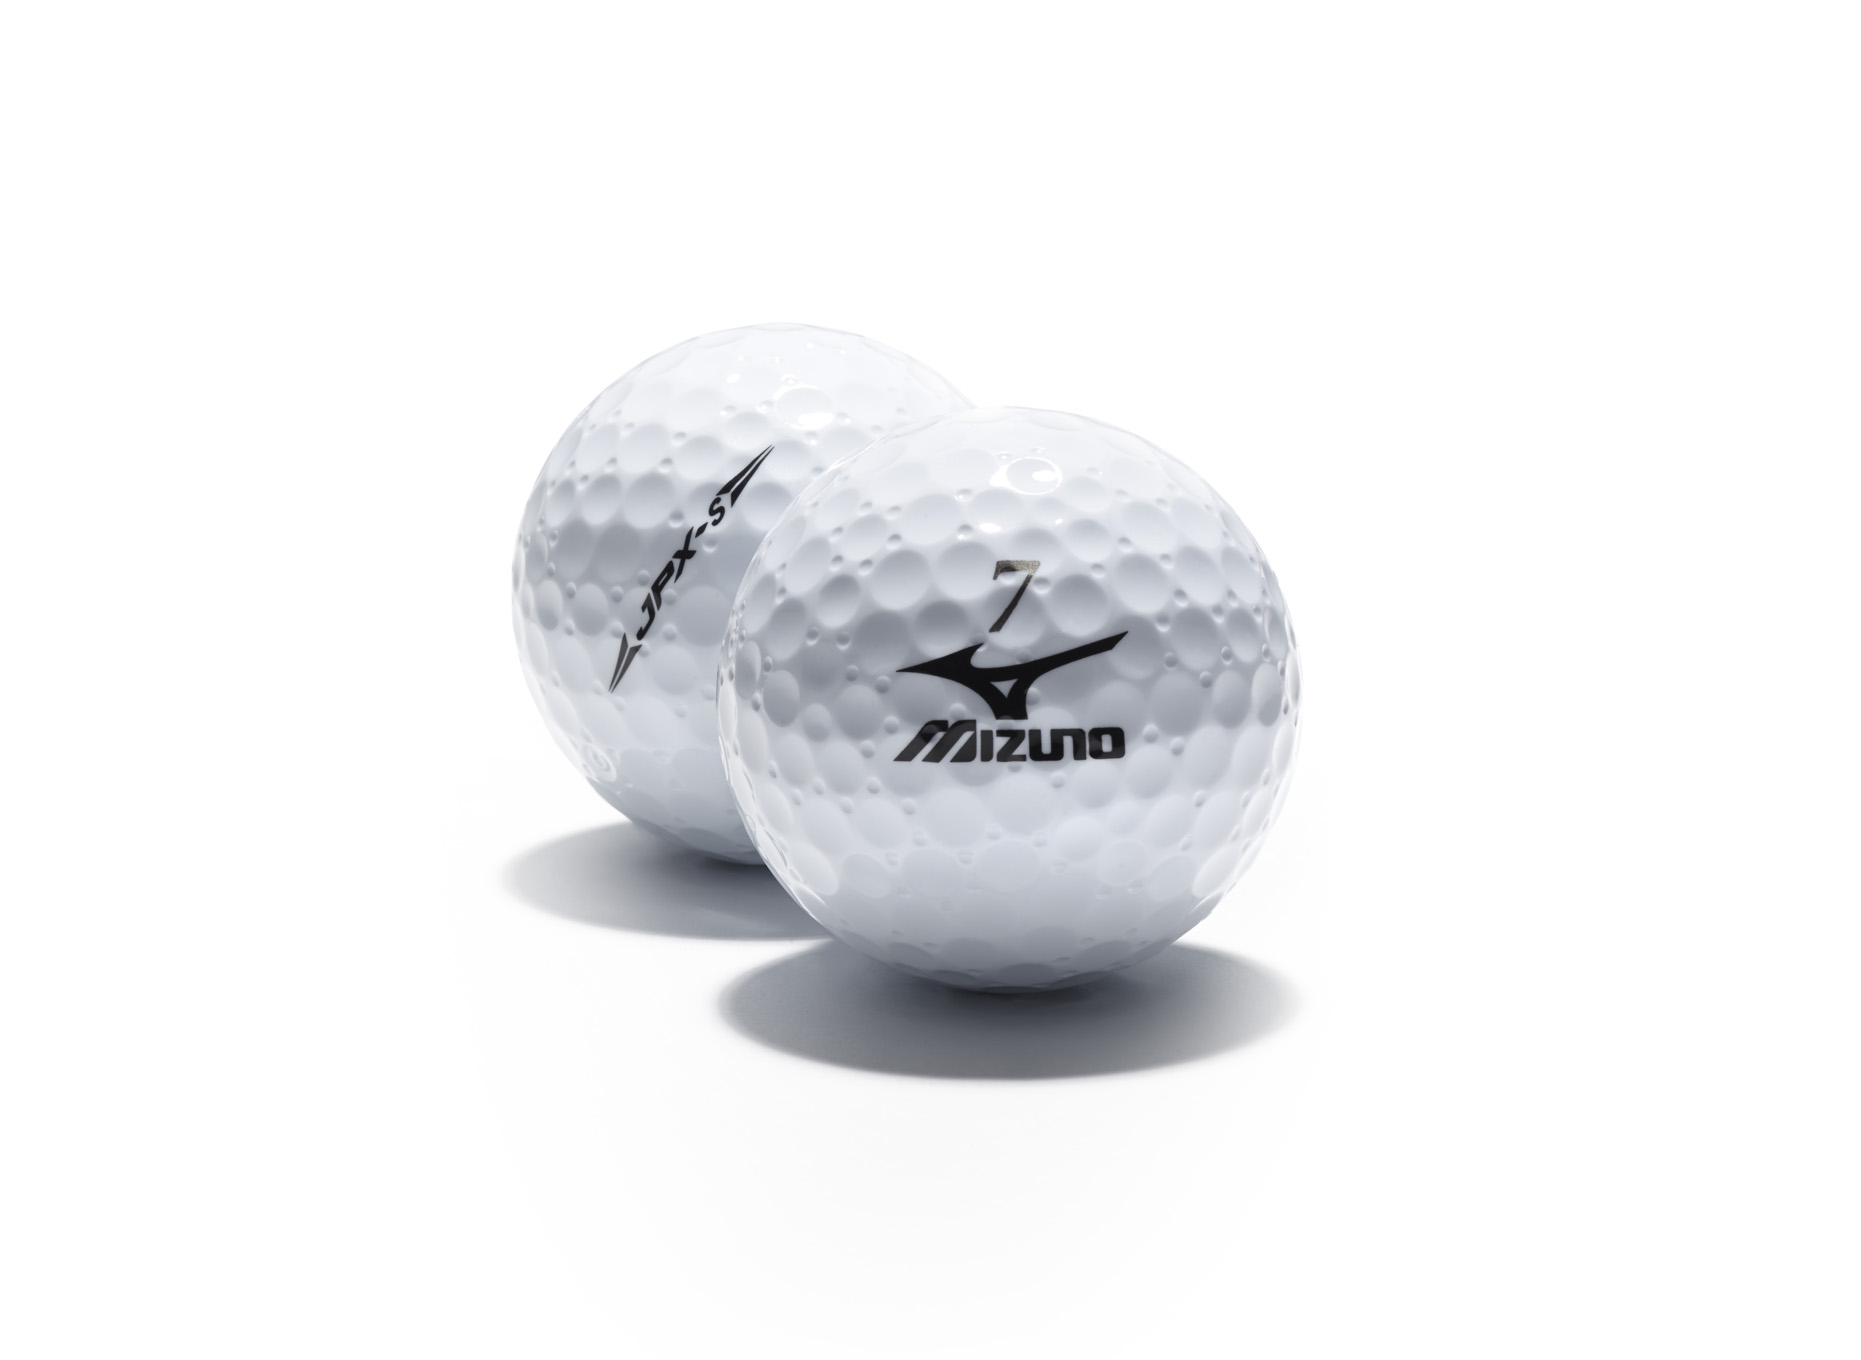 Mizuno add JPX-S golf ball to line-up